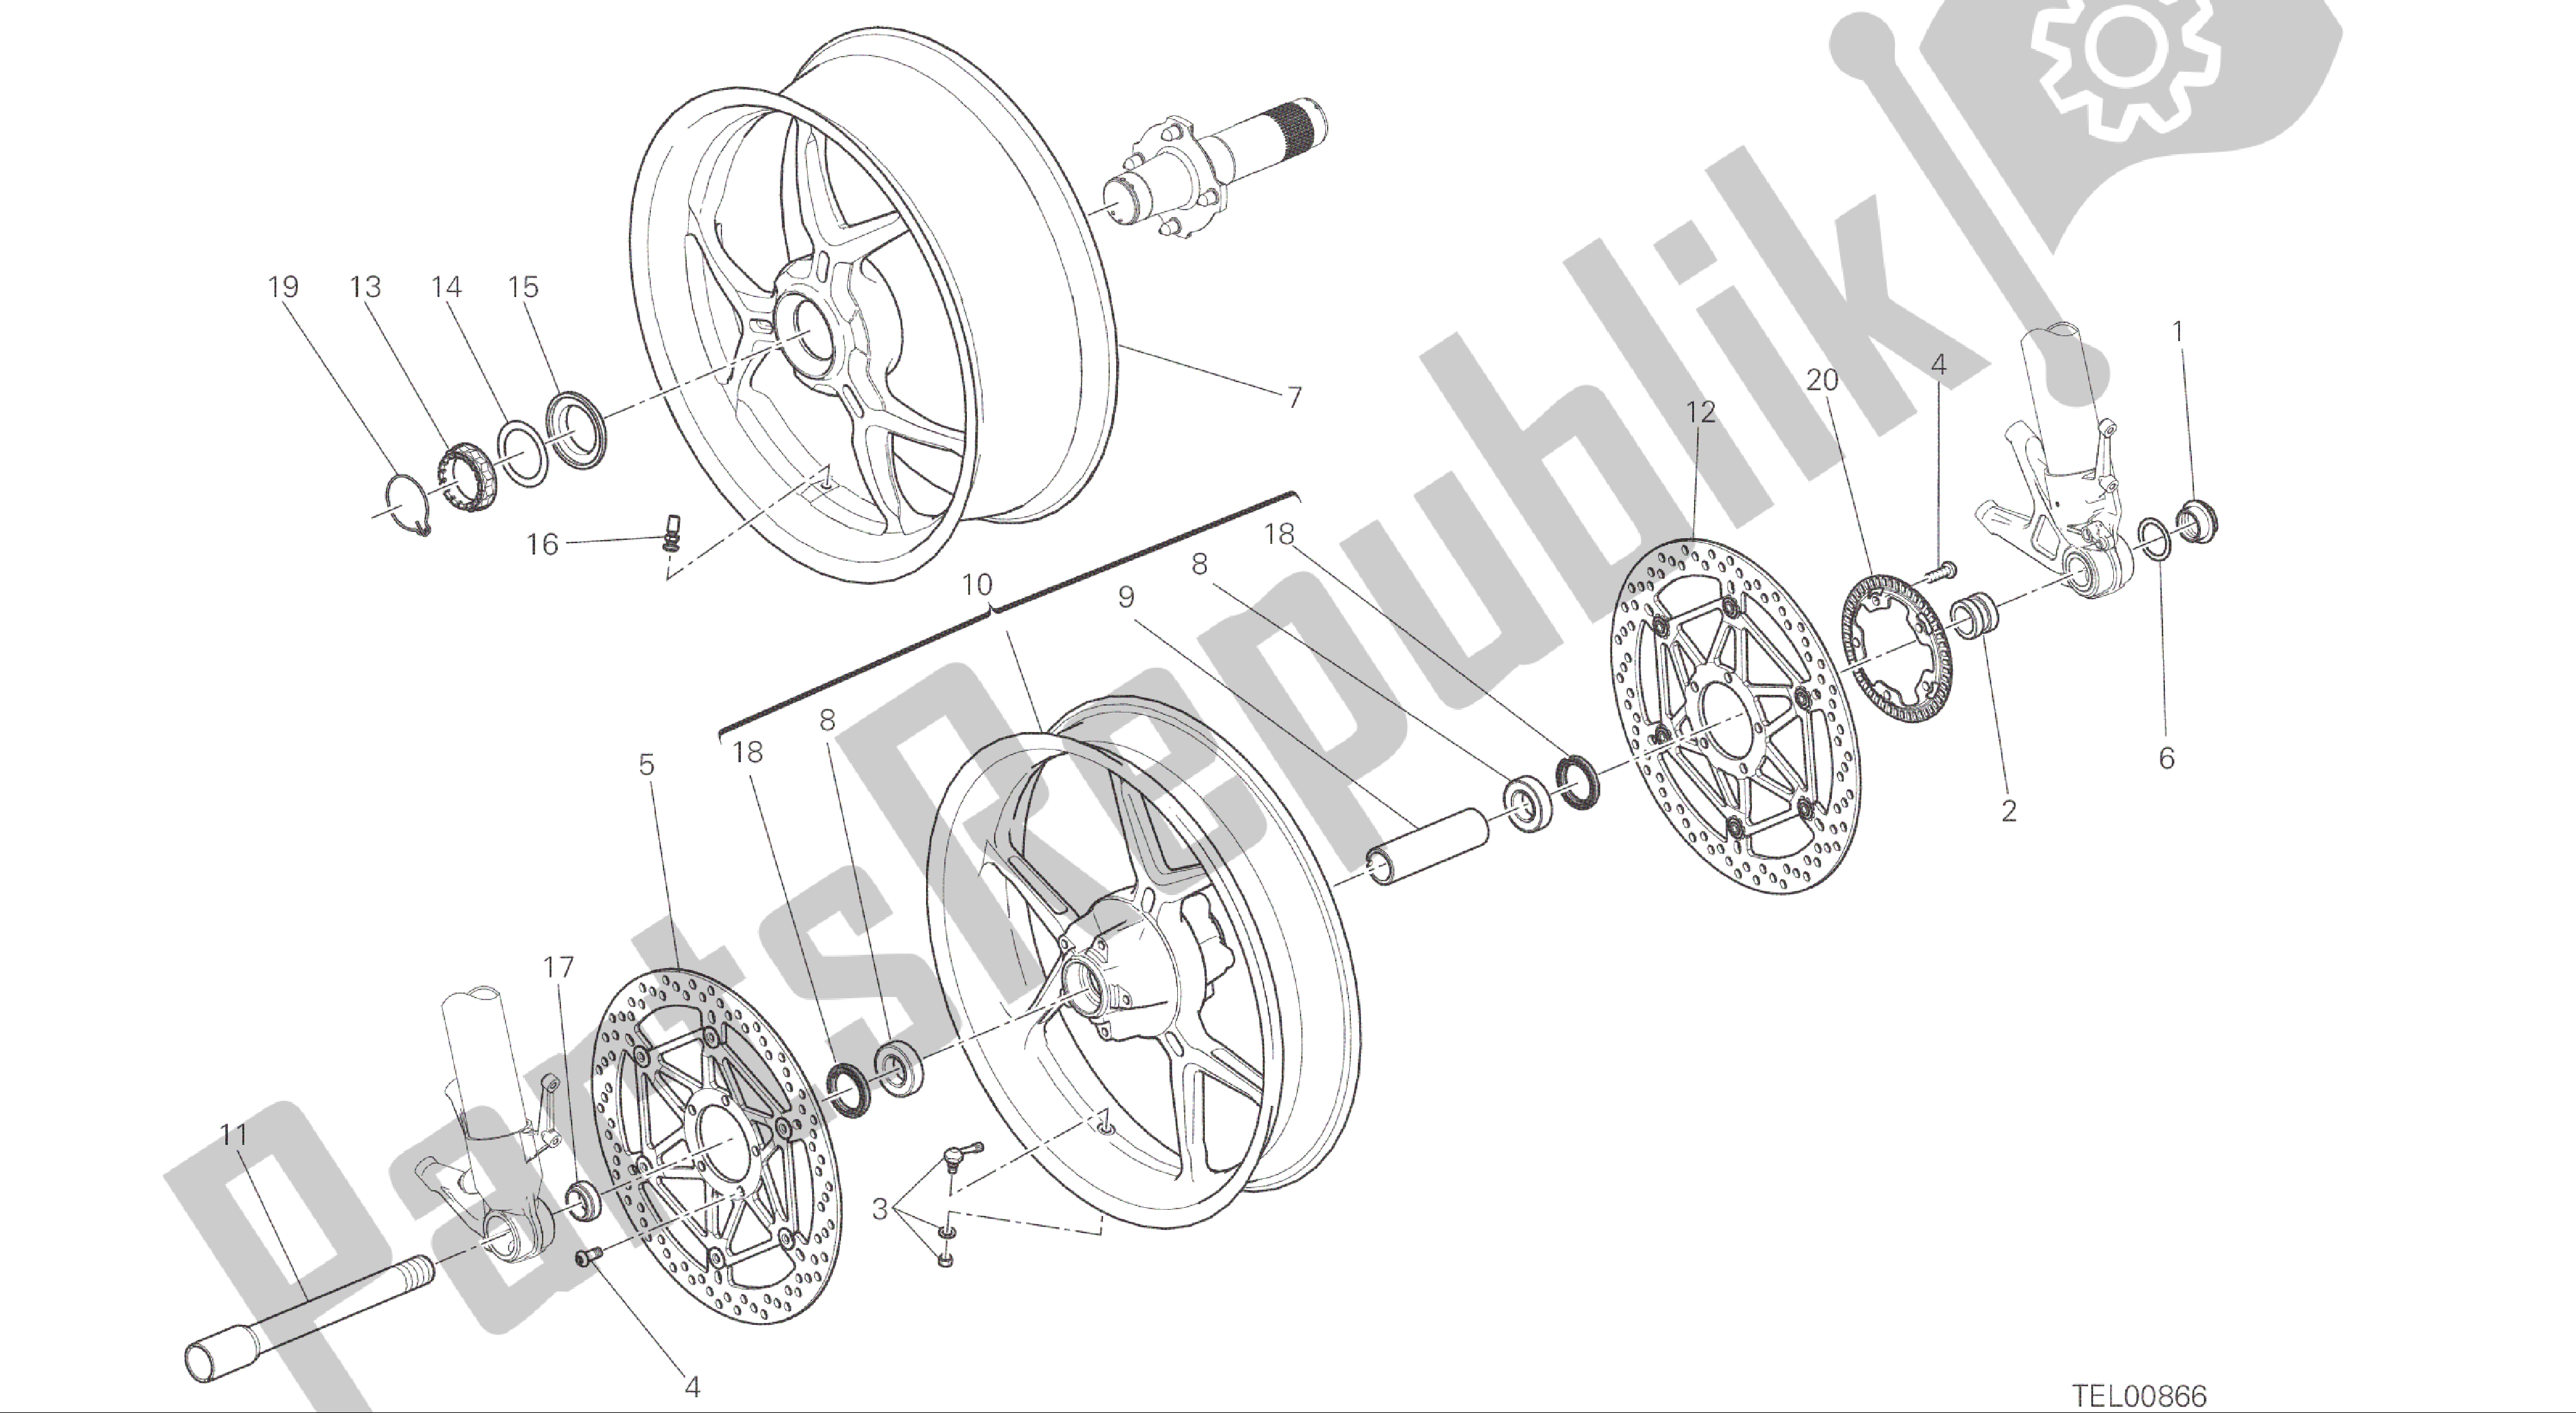 Alle onderdelen voor de Tekening 026 - Ruota Anteriore E Posteriore [mod: 1299; Xst: Aus, Eur, Fra, Jap, Twn] Groepsframe van de Ducati Panigale ABS 1299 2016